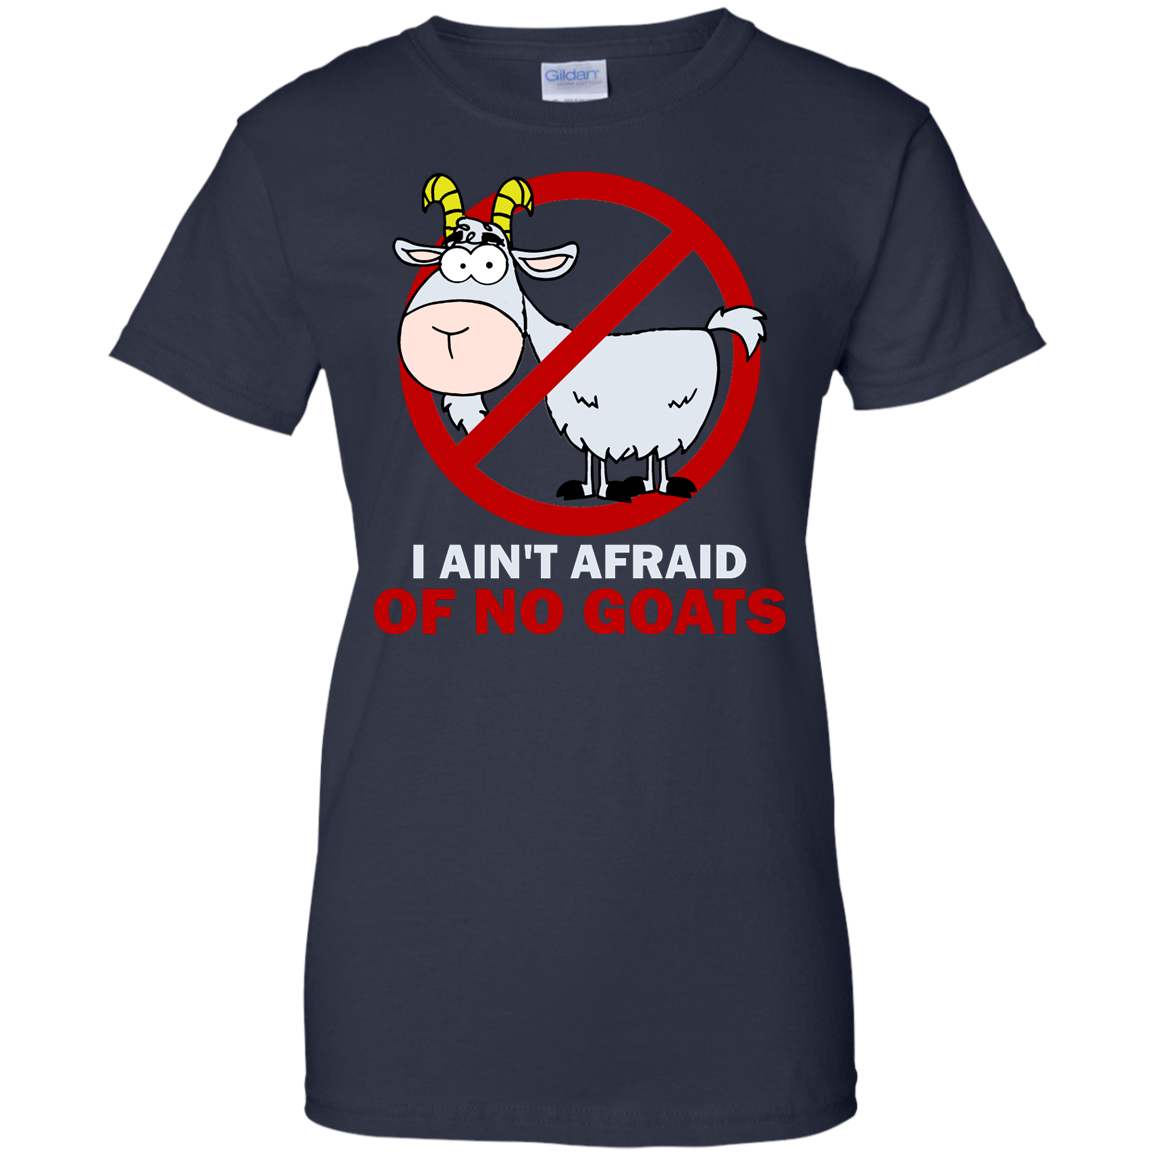 I Ain't Afraid of No Goats Shirt, Hoodie, Tank - ifrogtees